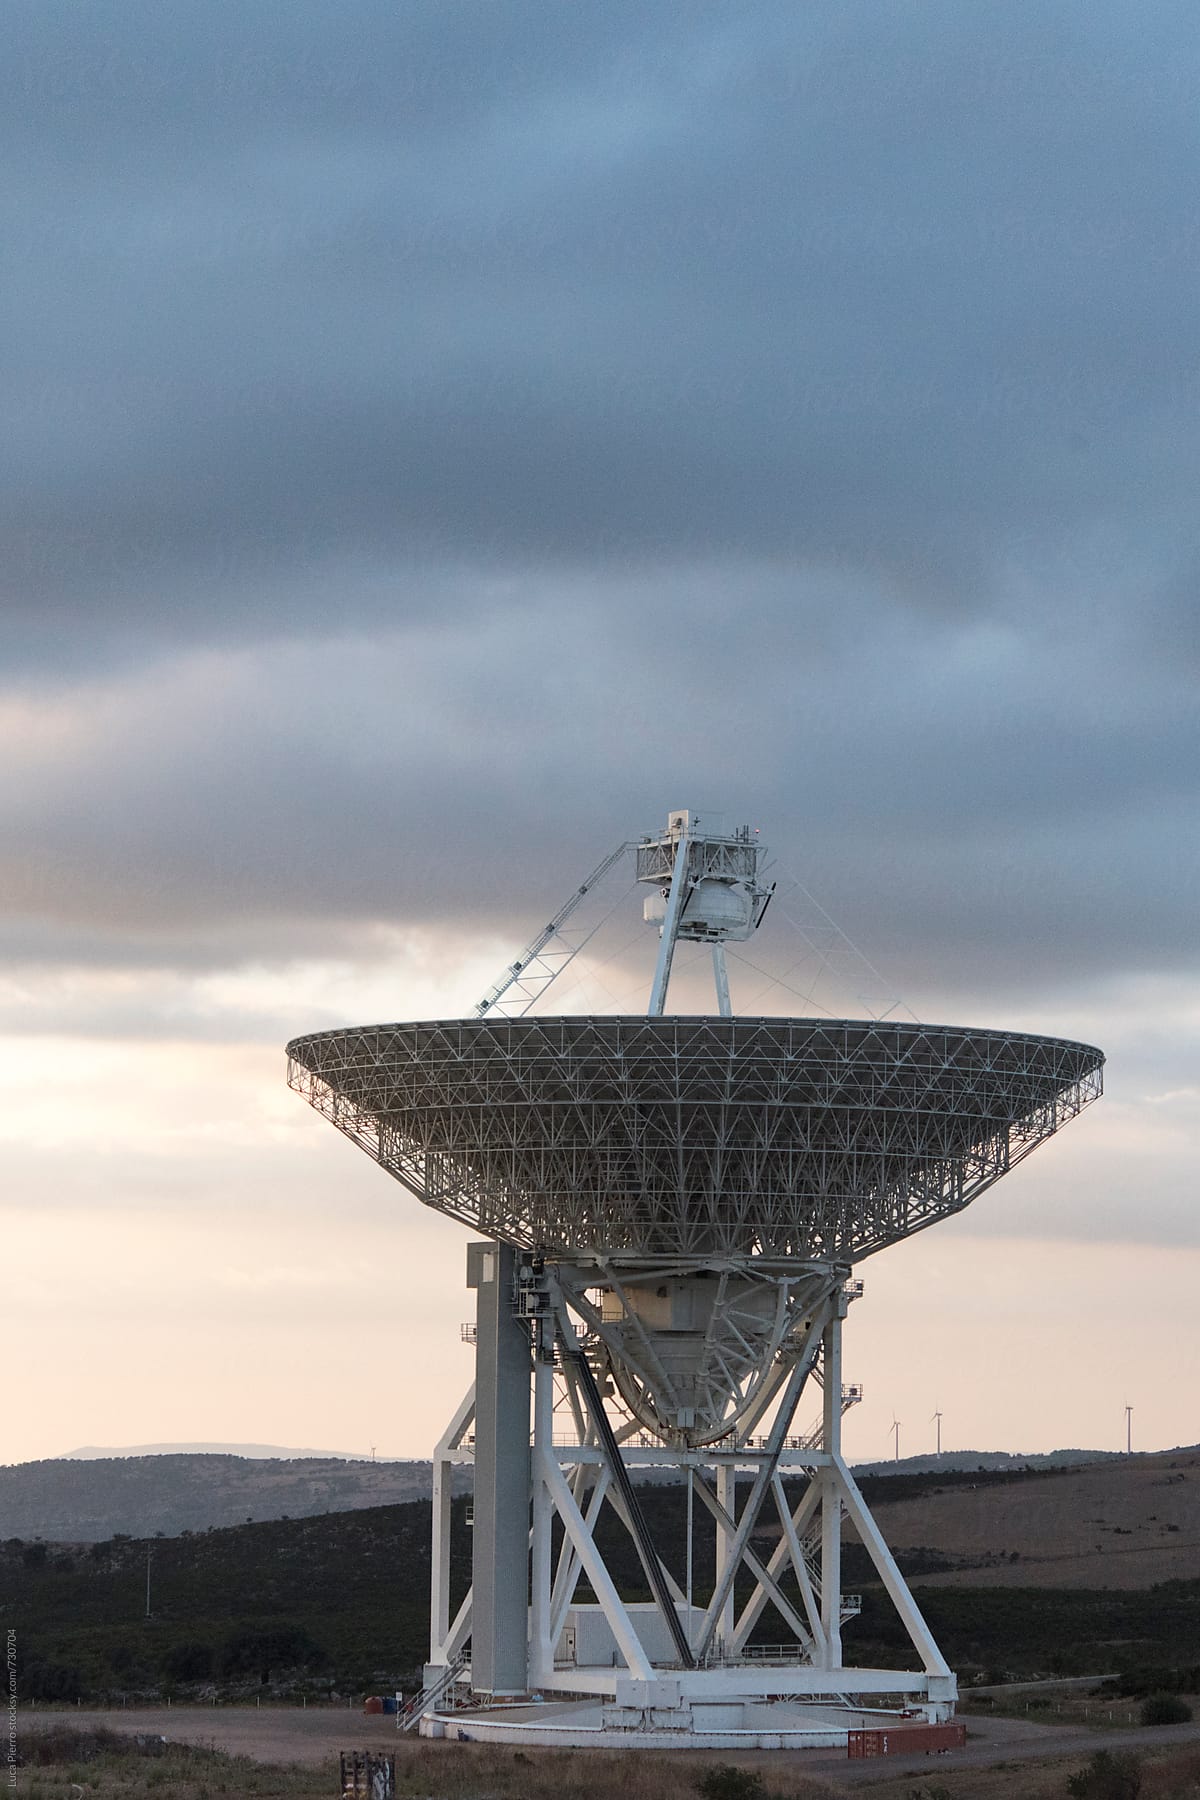 Large radio telescope